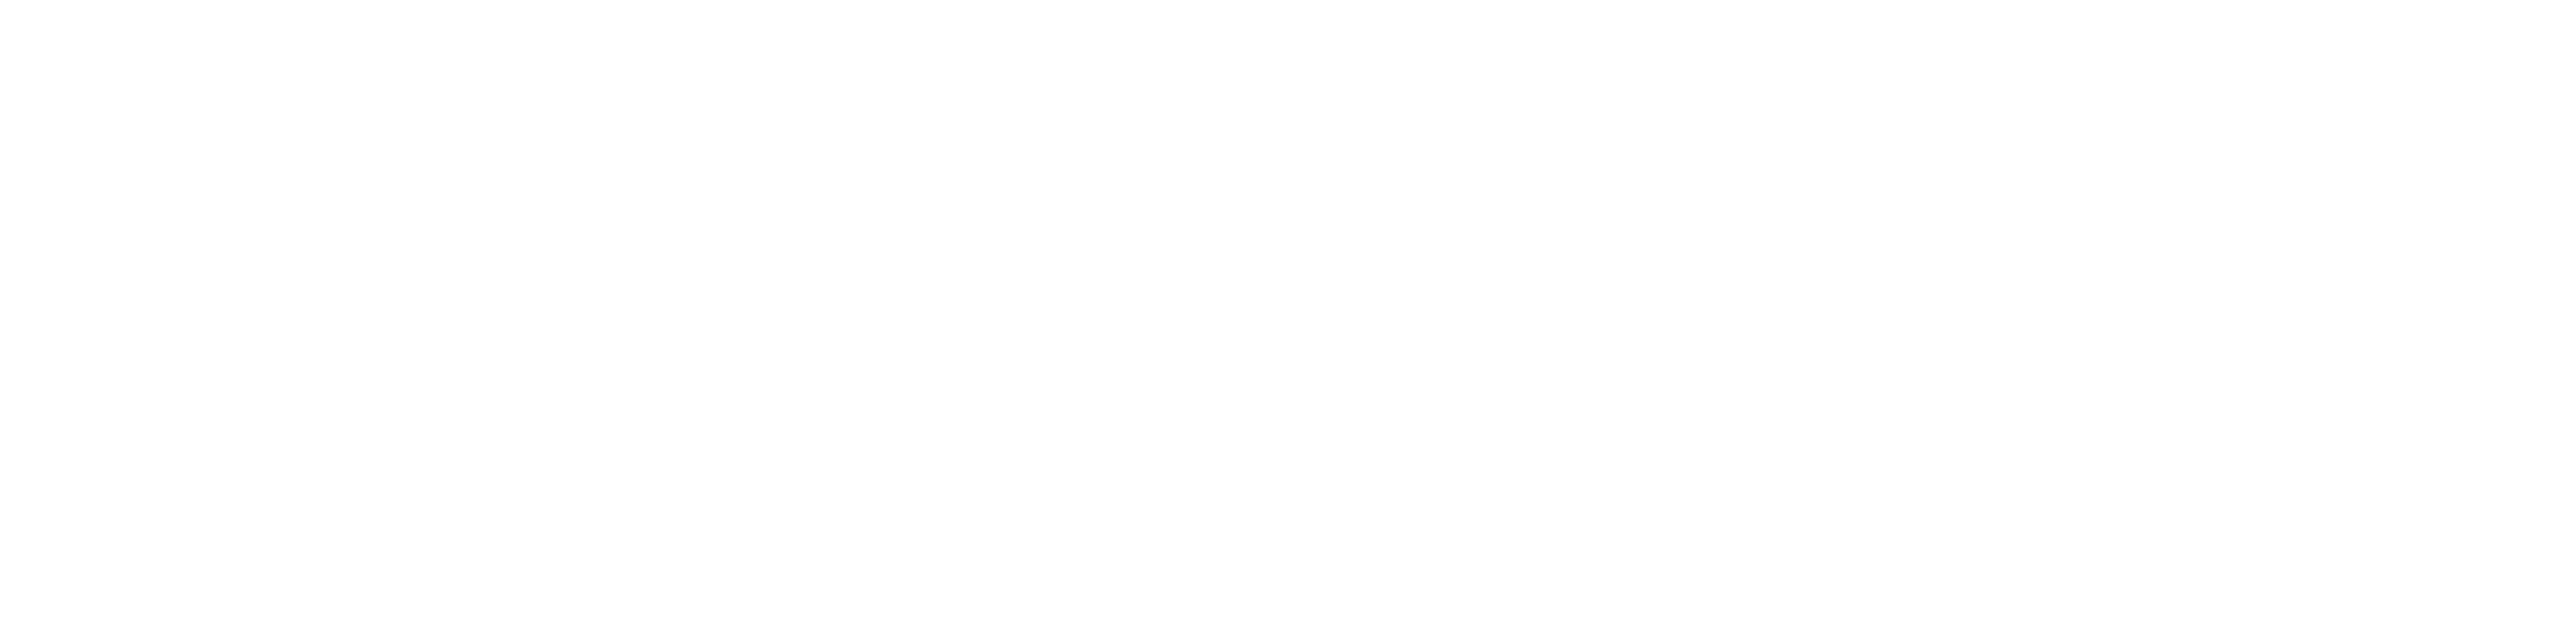 Båstad Tourism & Business Negativ logo-42